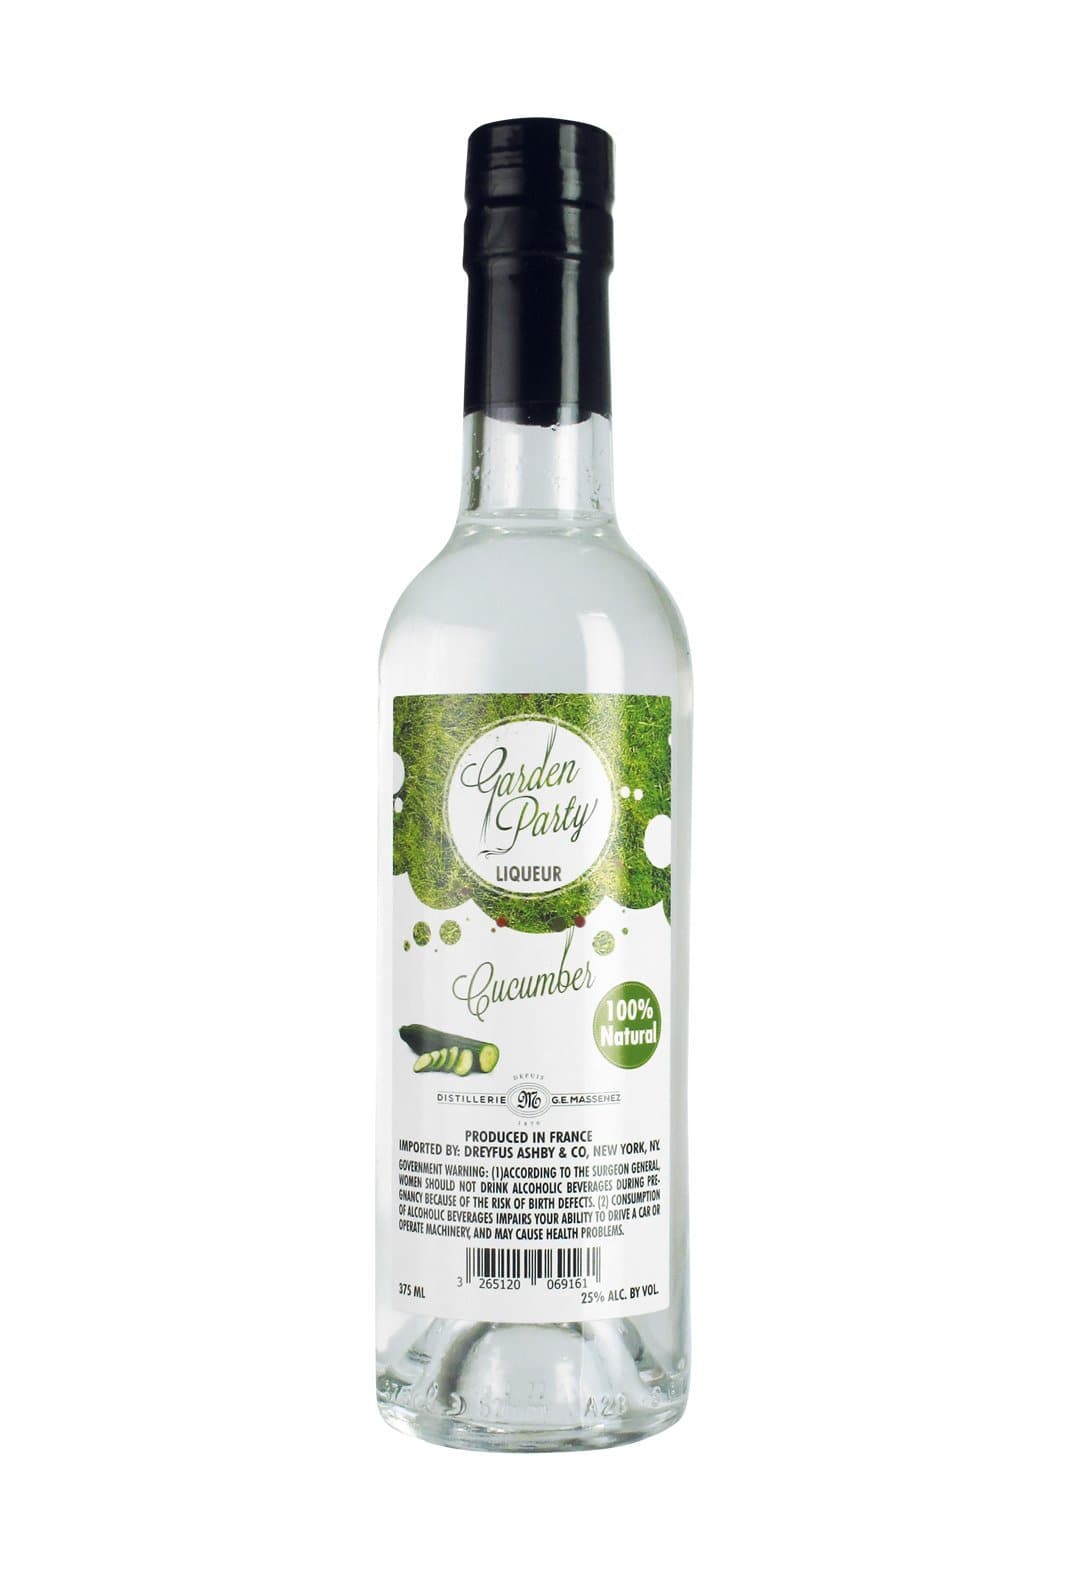 Massenez Garden Party Cucumber 25% 375ml | Liqueurs | Shop online at Spirits of France